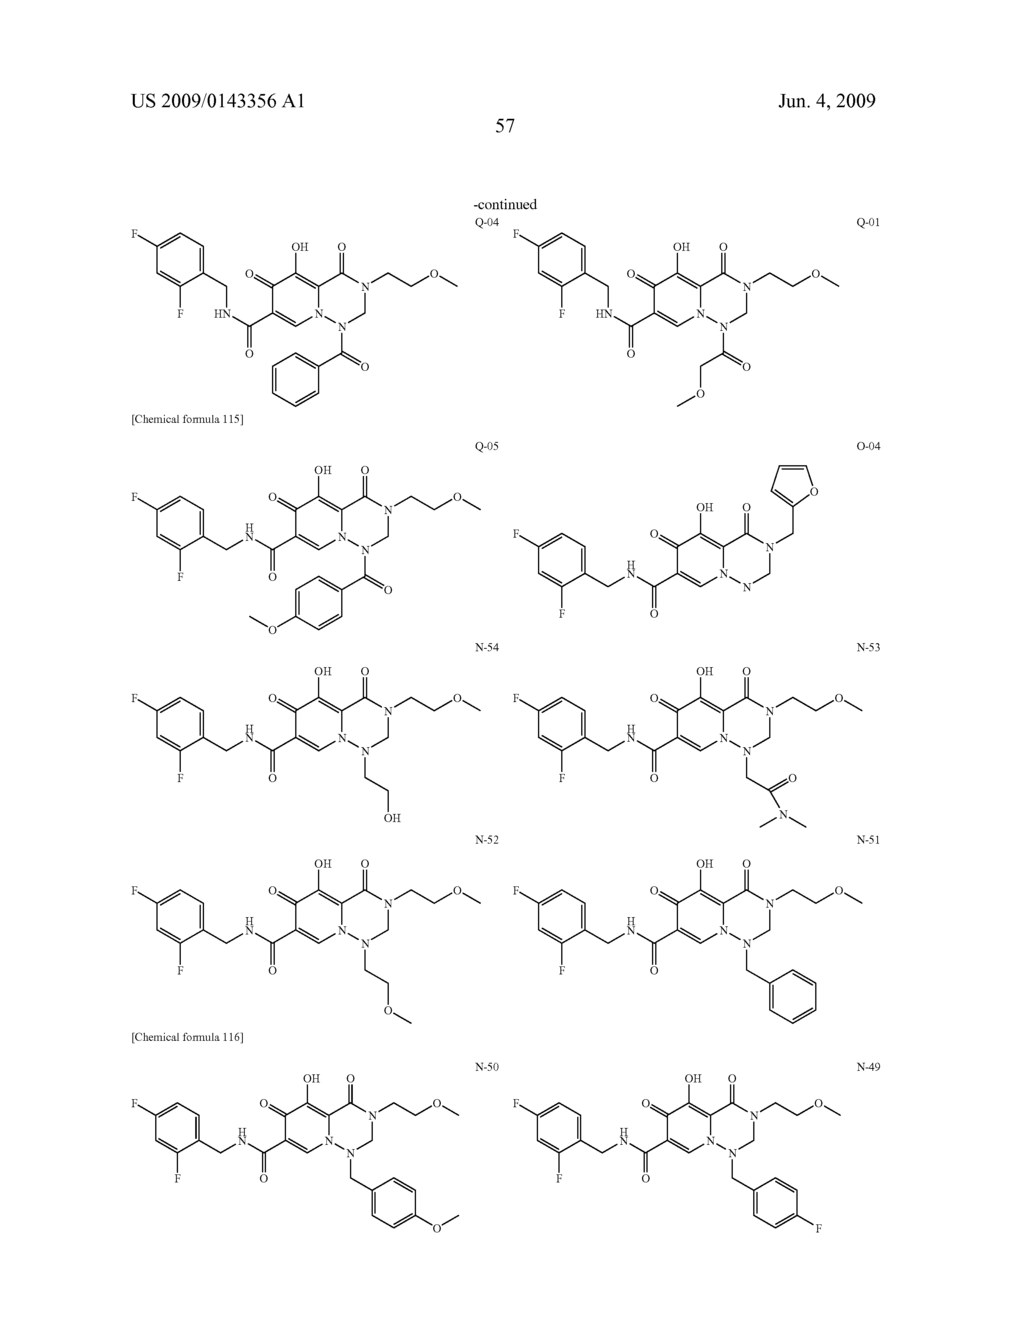 Polycylclic Carbamoylpyridone Derivative Having HIV Integrase Inhibitory Acitvity - diagram, schematic, and image 58